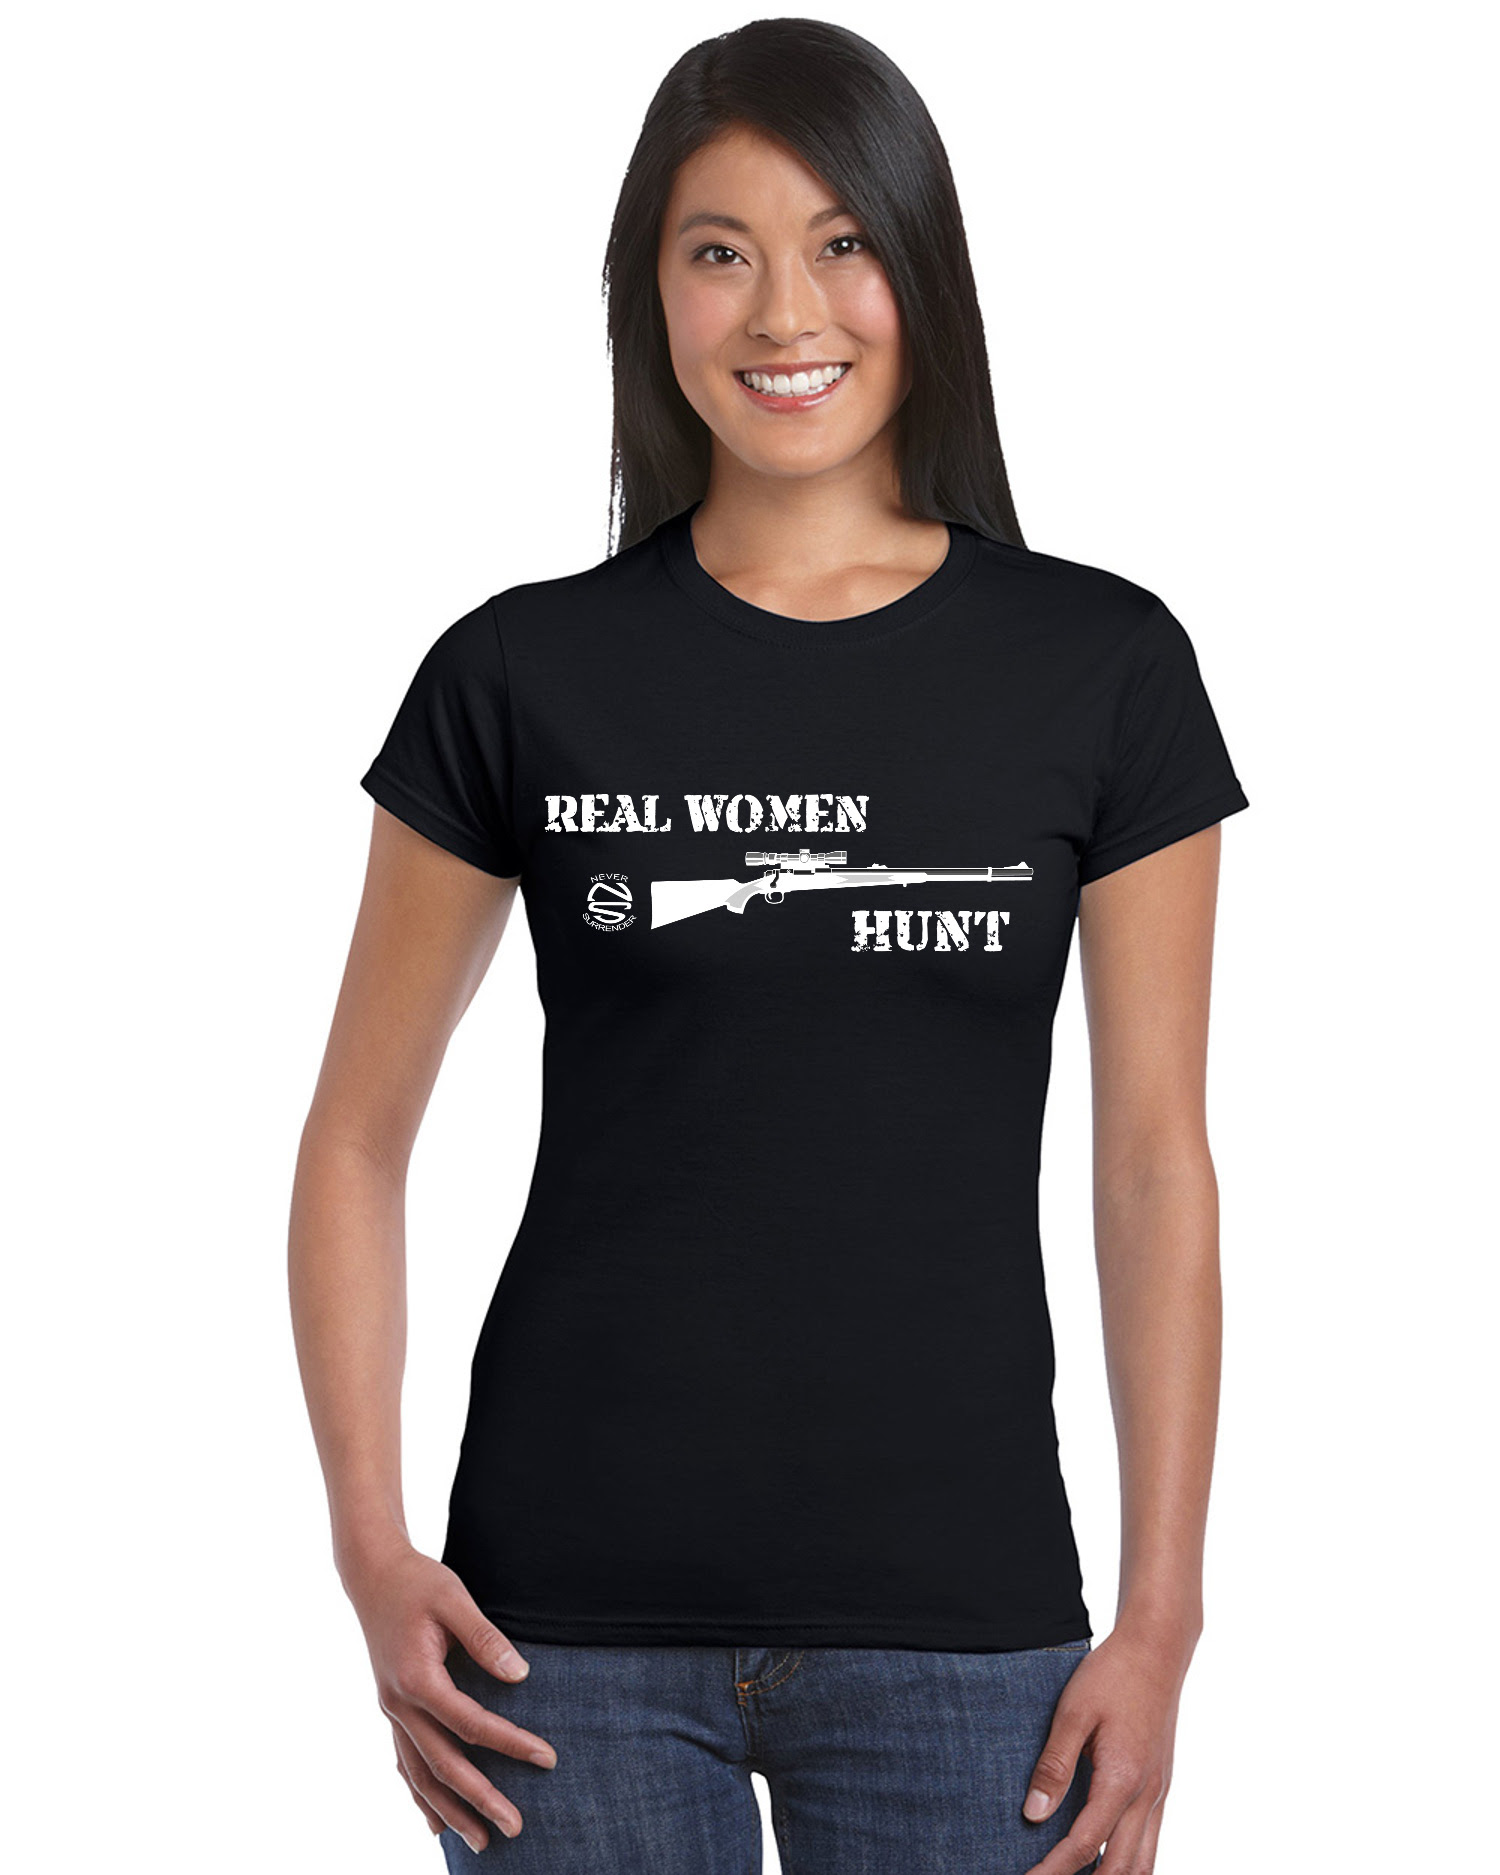 Real Women Hunt - Deer Hunting T Shirt from Never Surrender